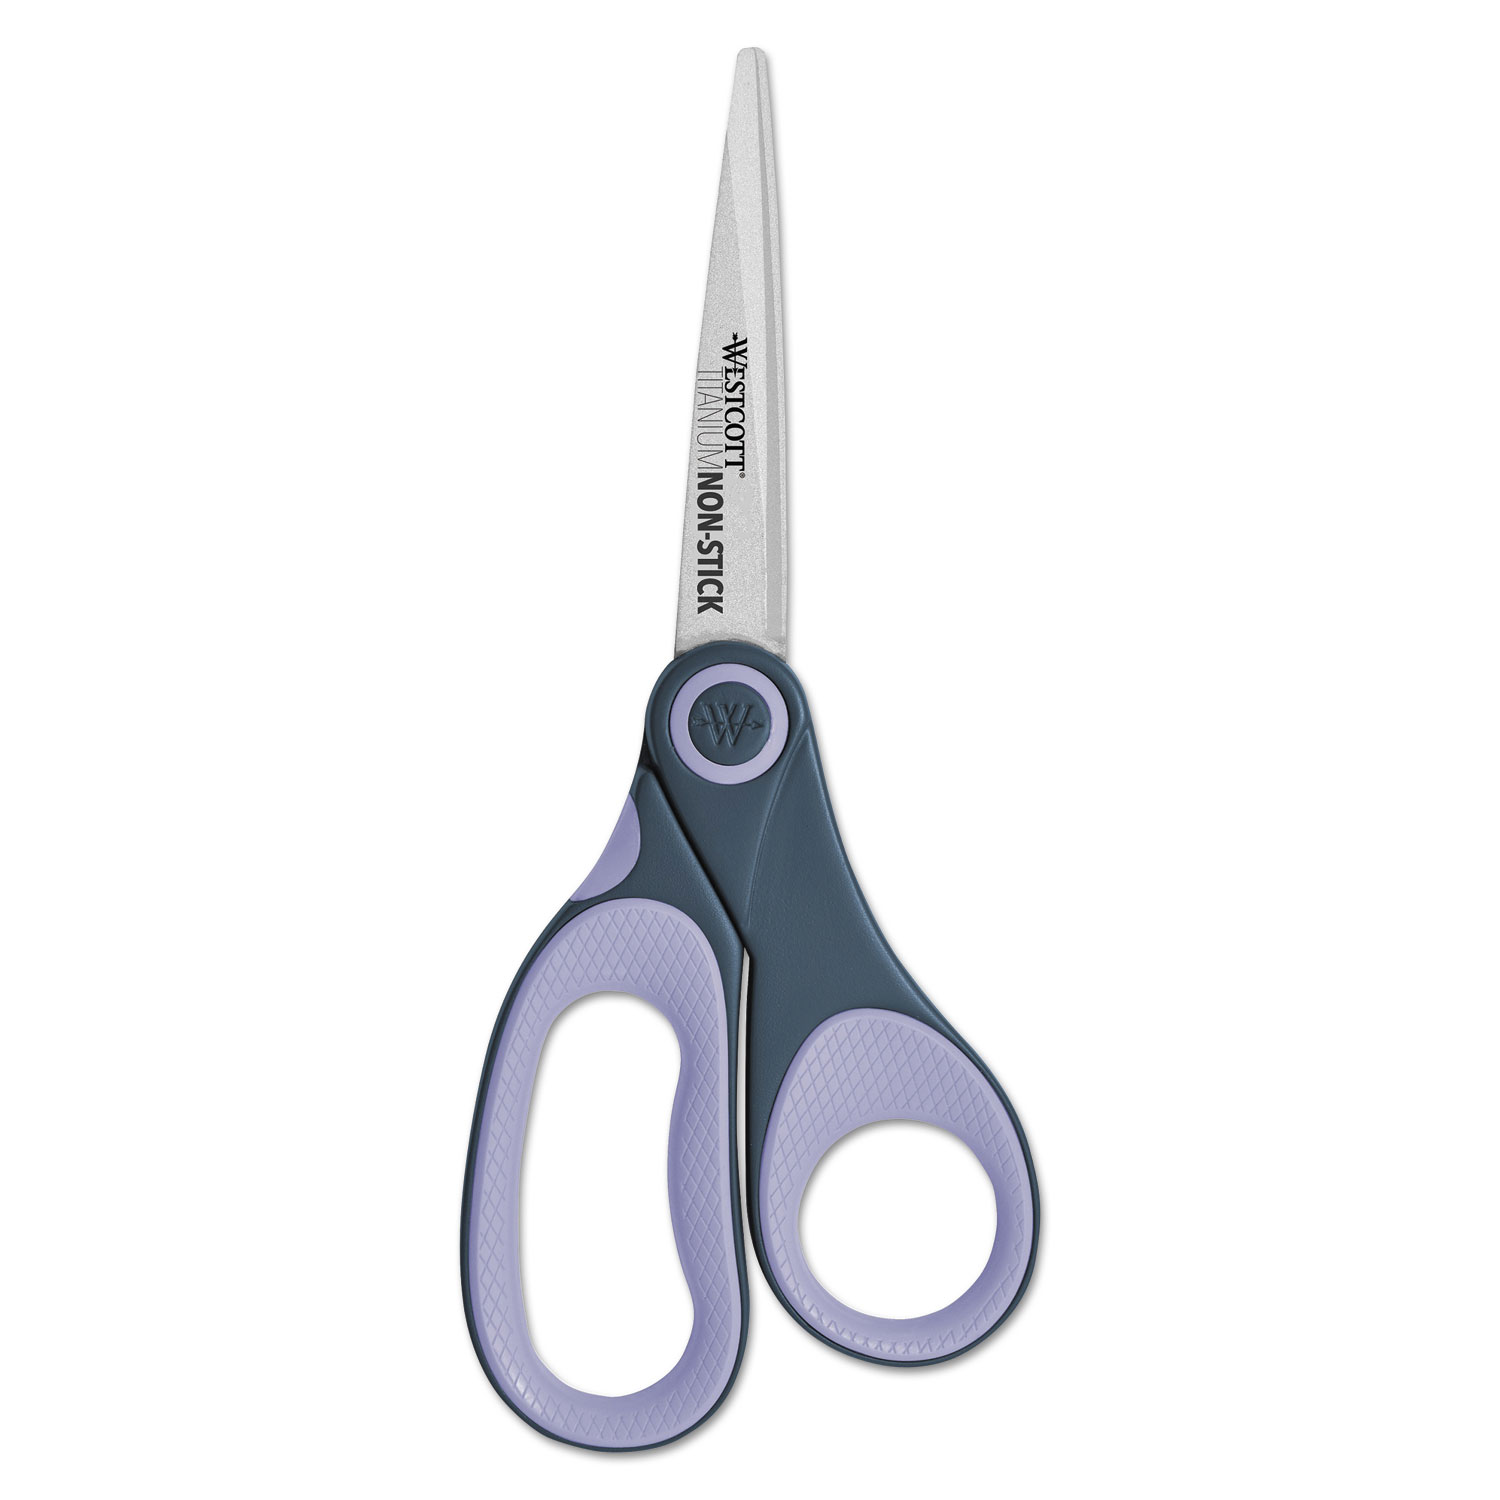  Westcott 14910 Non-Stick Titanium Bonded Scissors, Pointed Tip, 8 Long, 3.25 Cut Length, Gray/Purple Straight Handle (ACM14910) 